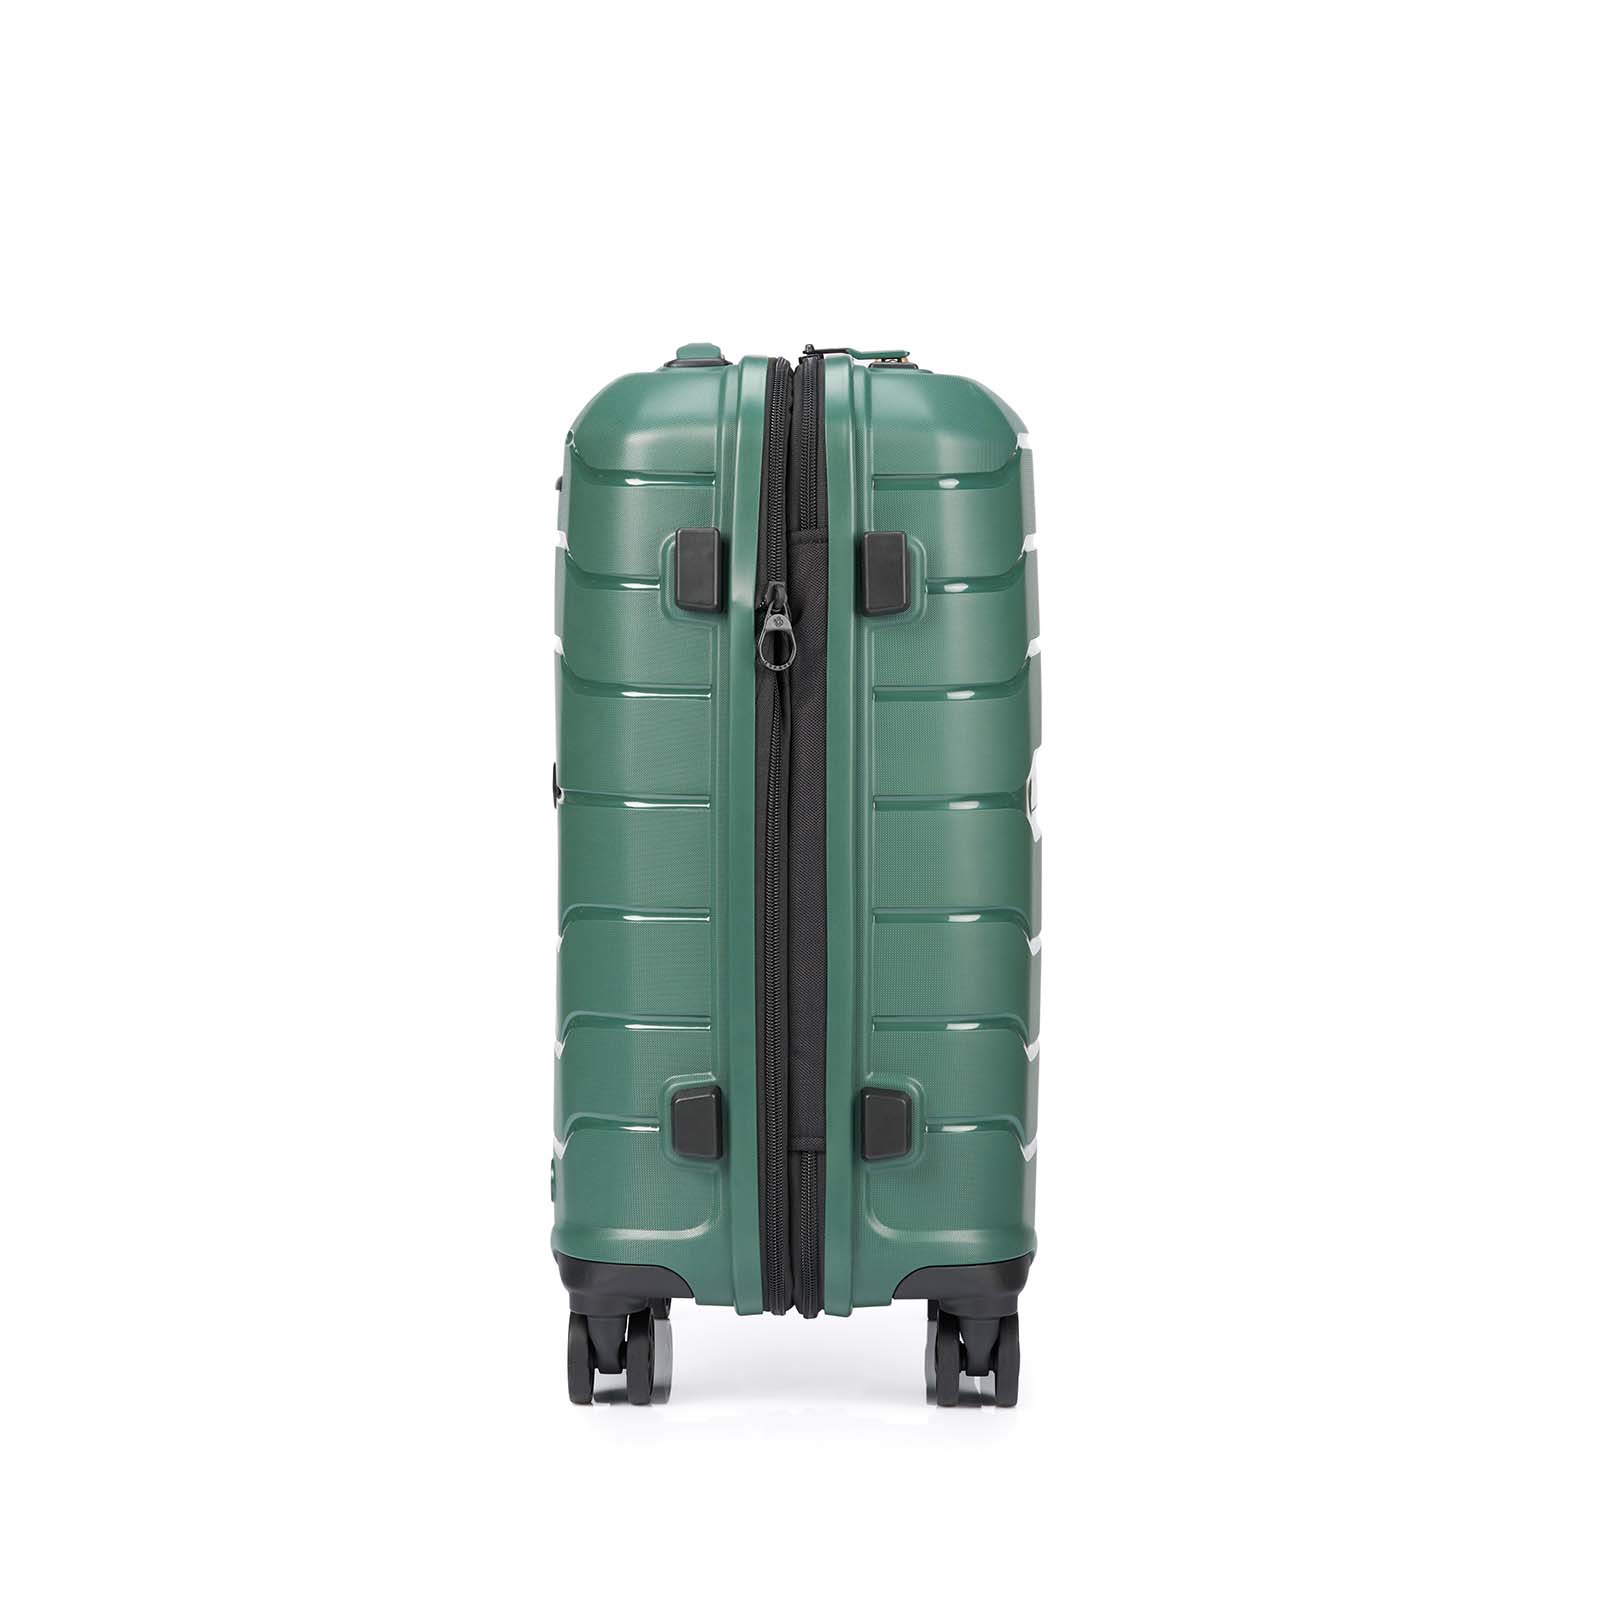 Samsonite-Oc2lite-55cm-Carry-On-Suitcase-Urban-Green-Side